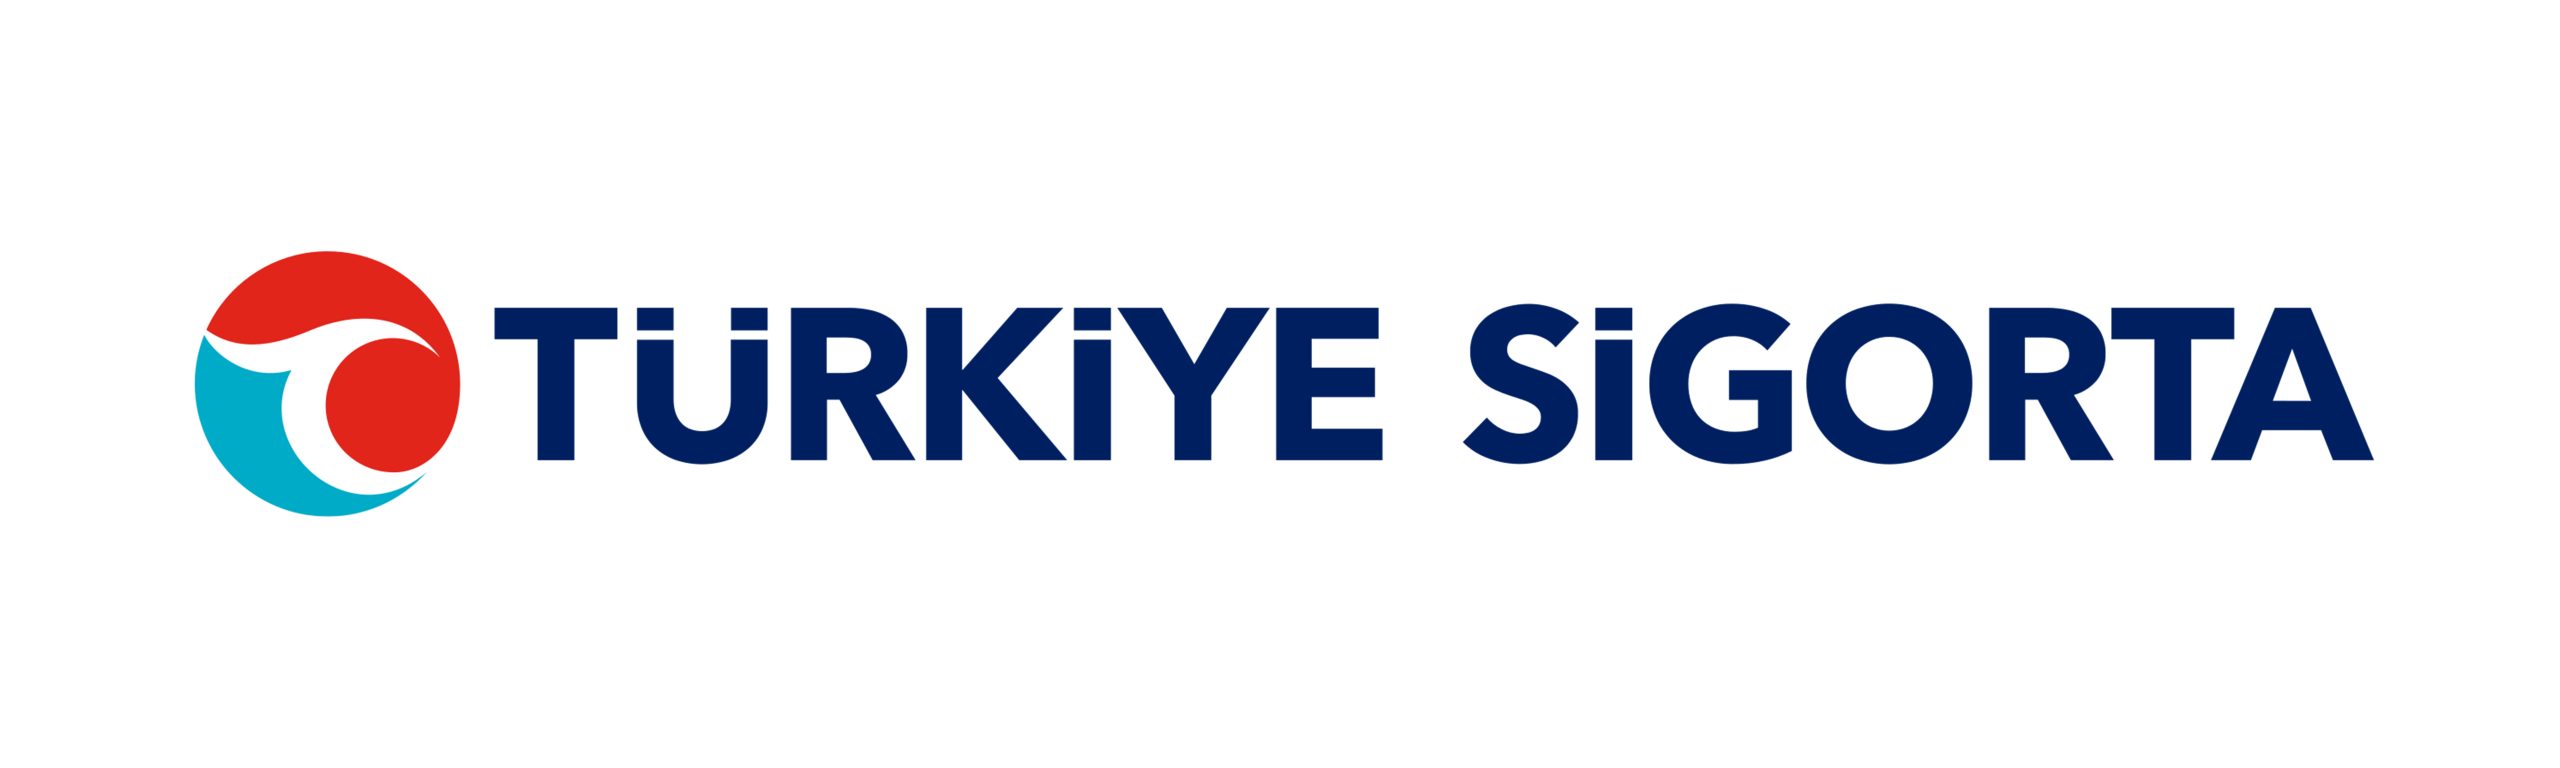 Anlaşmalı Sigortalar_0001_Türkiye_Sigorta_logo.svg